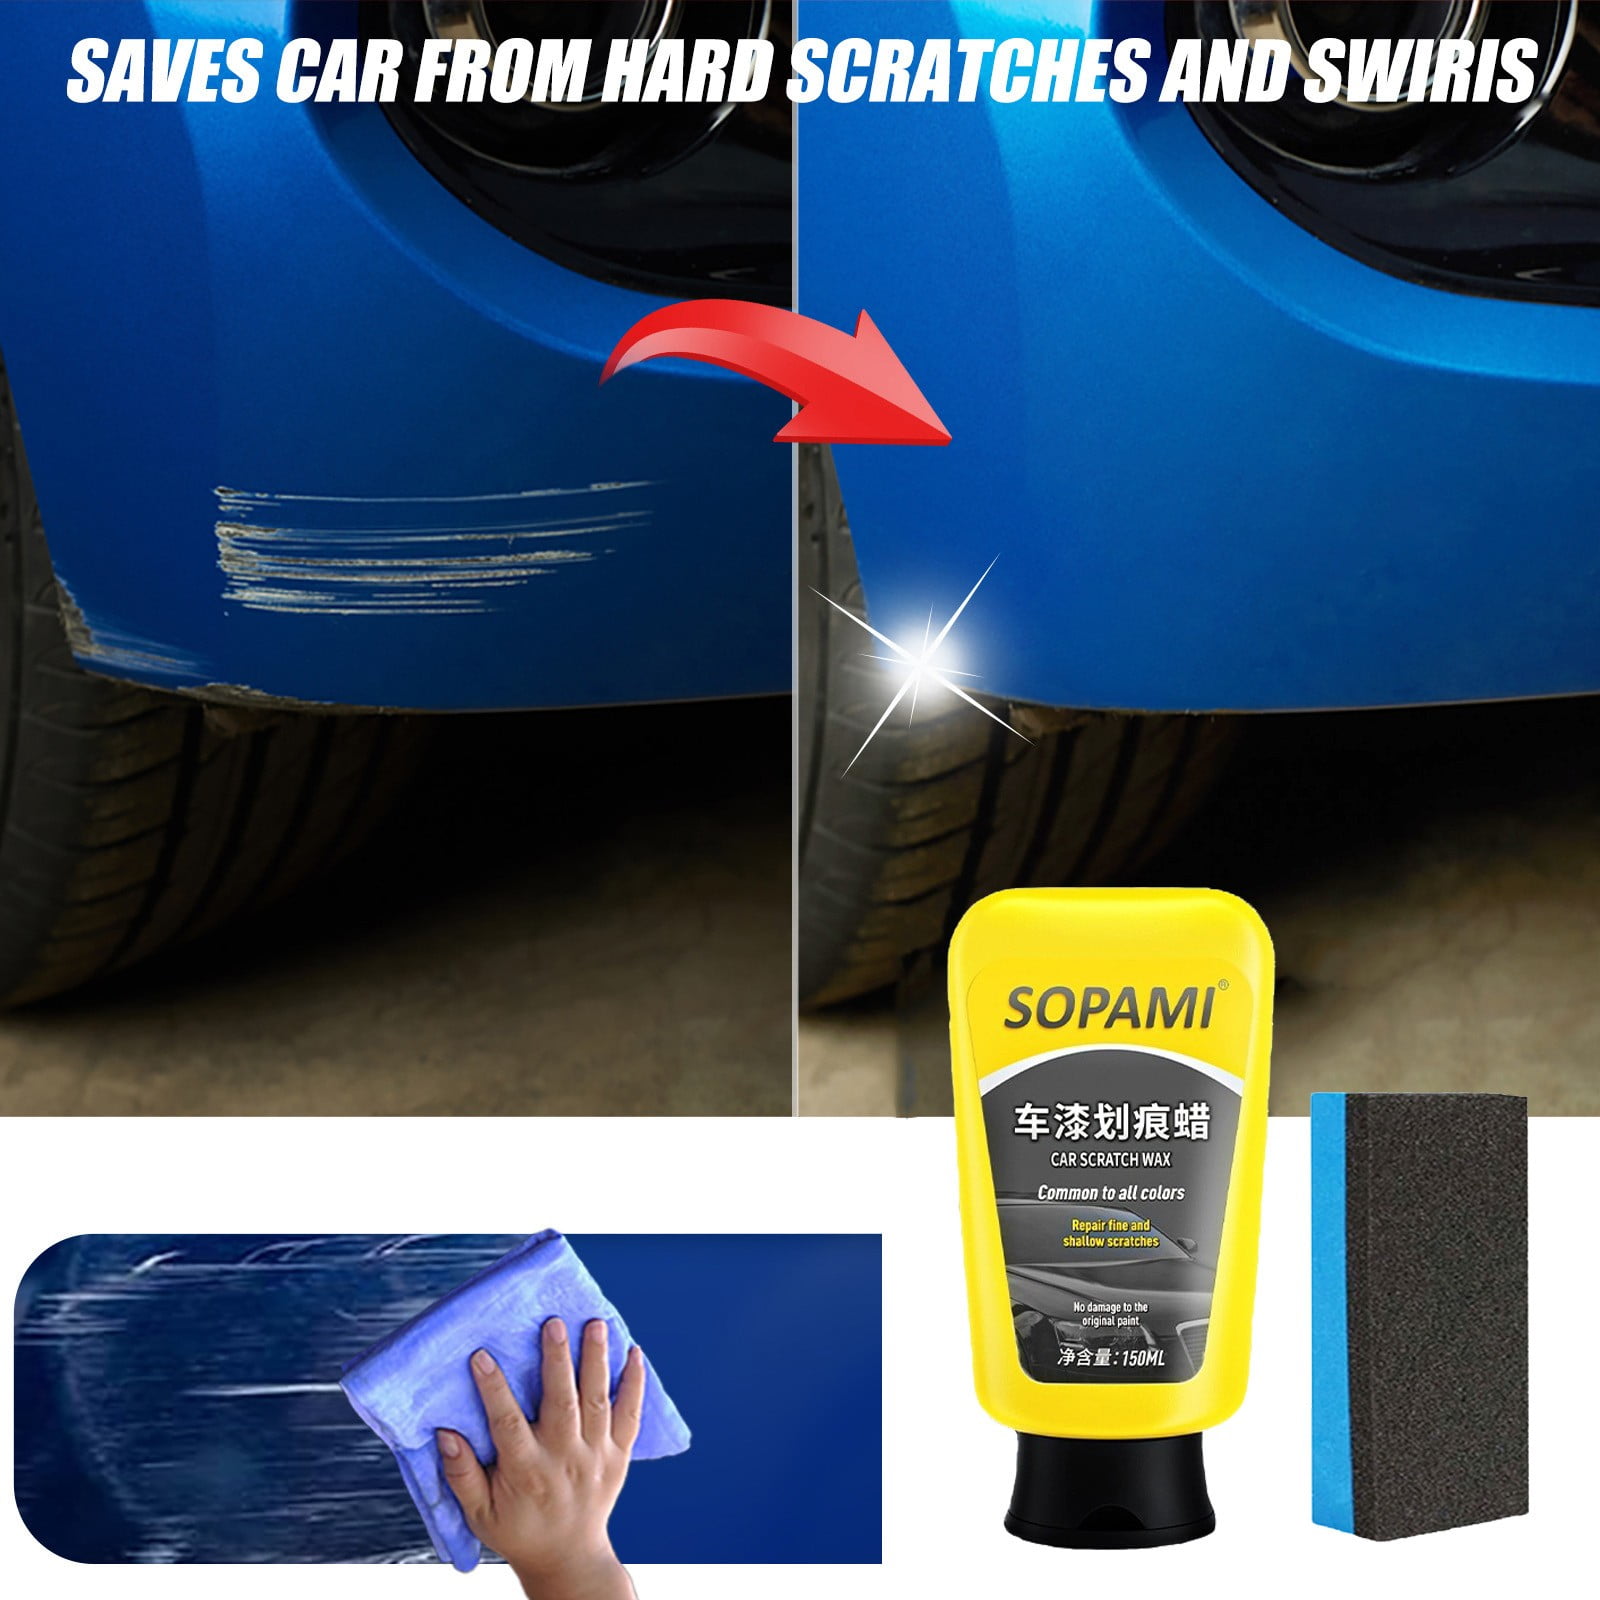 1X Sopami Car Coating Spray, Protection Quick Car Wax Polish for